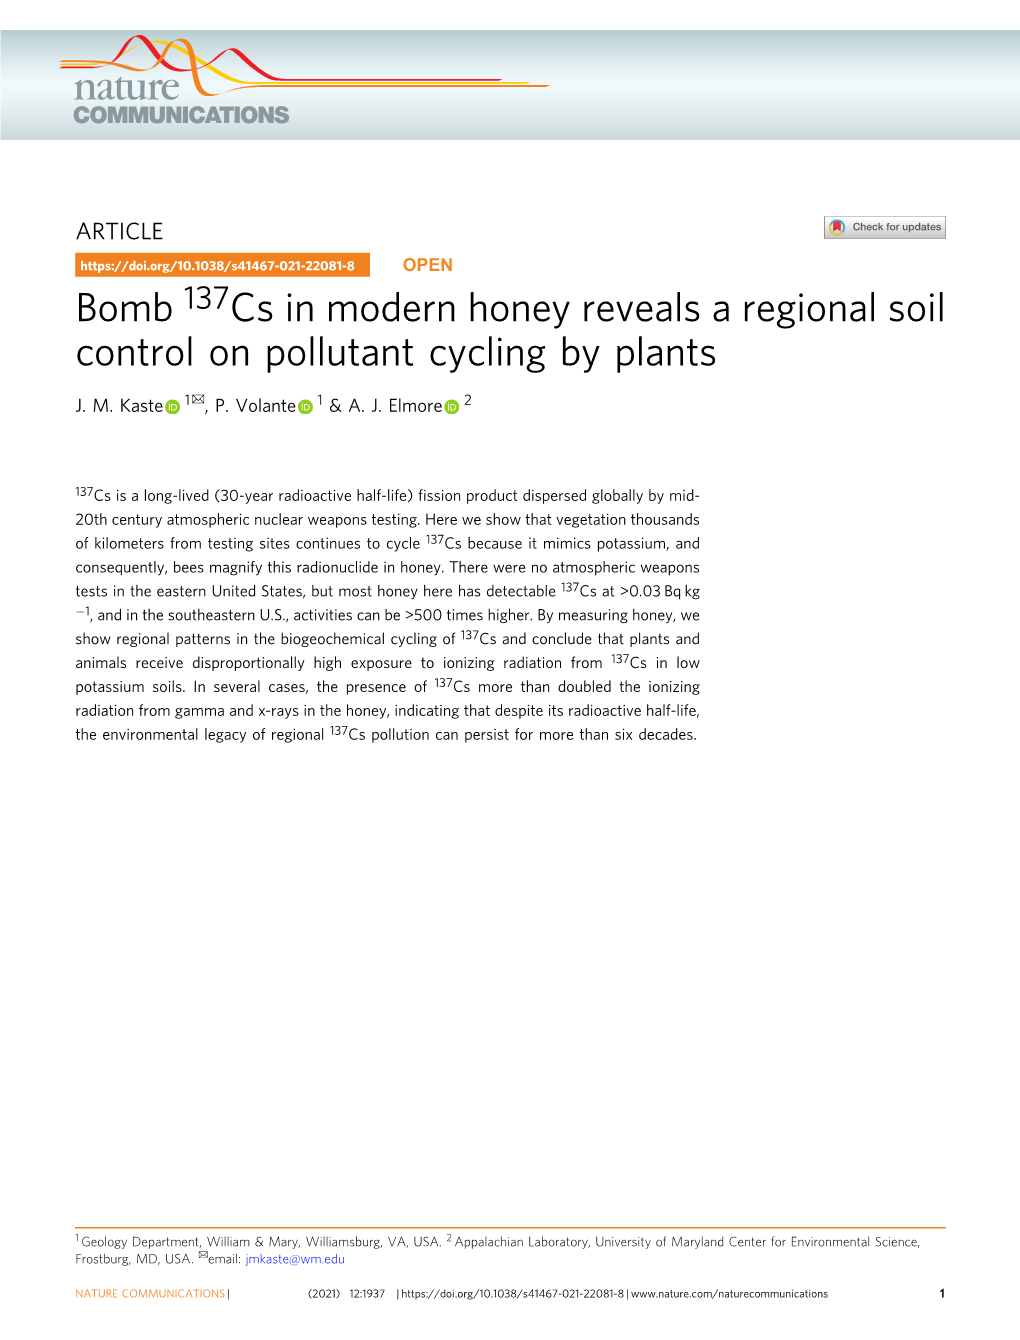 Bomb 137Cs in Modern Honey Reveals a Regional Soil Control on Pollutant Cycling by Plants ✉ J